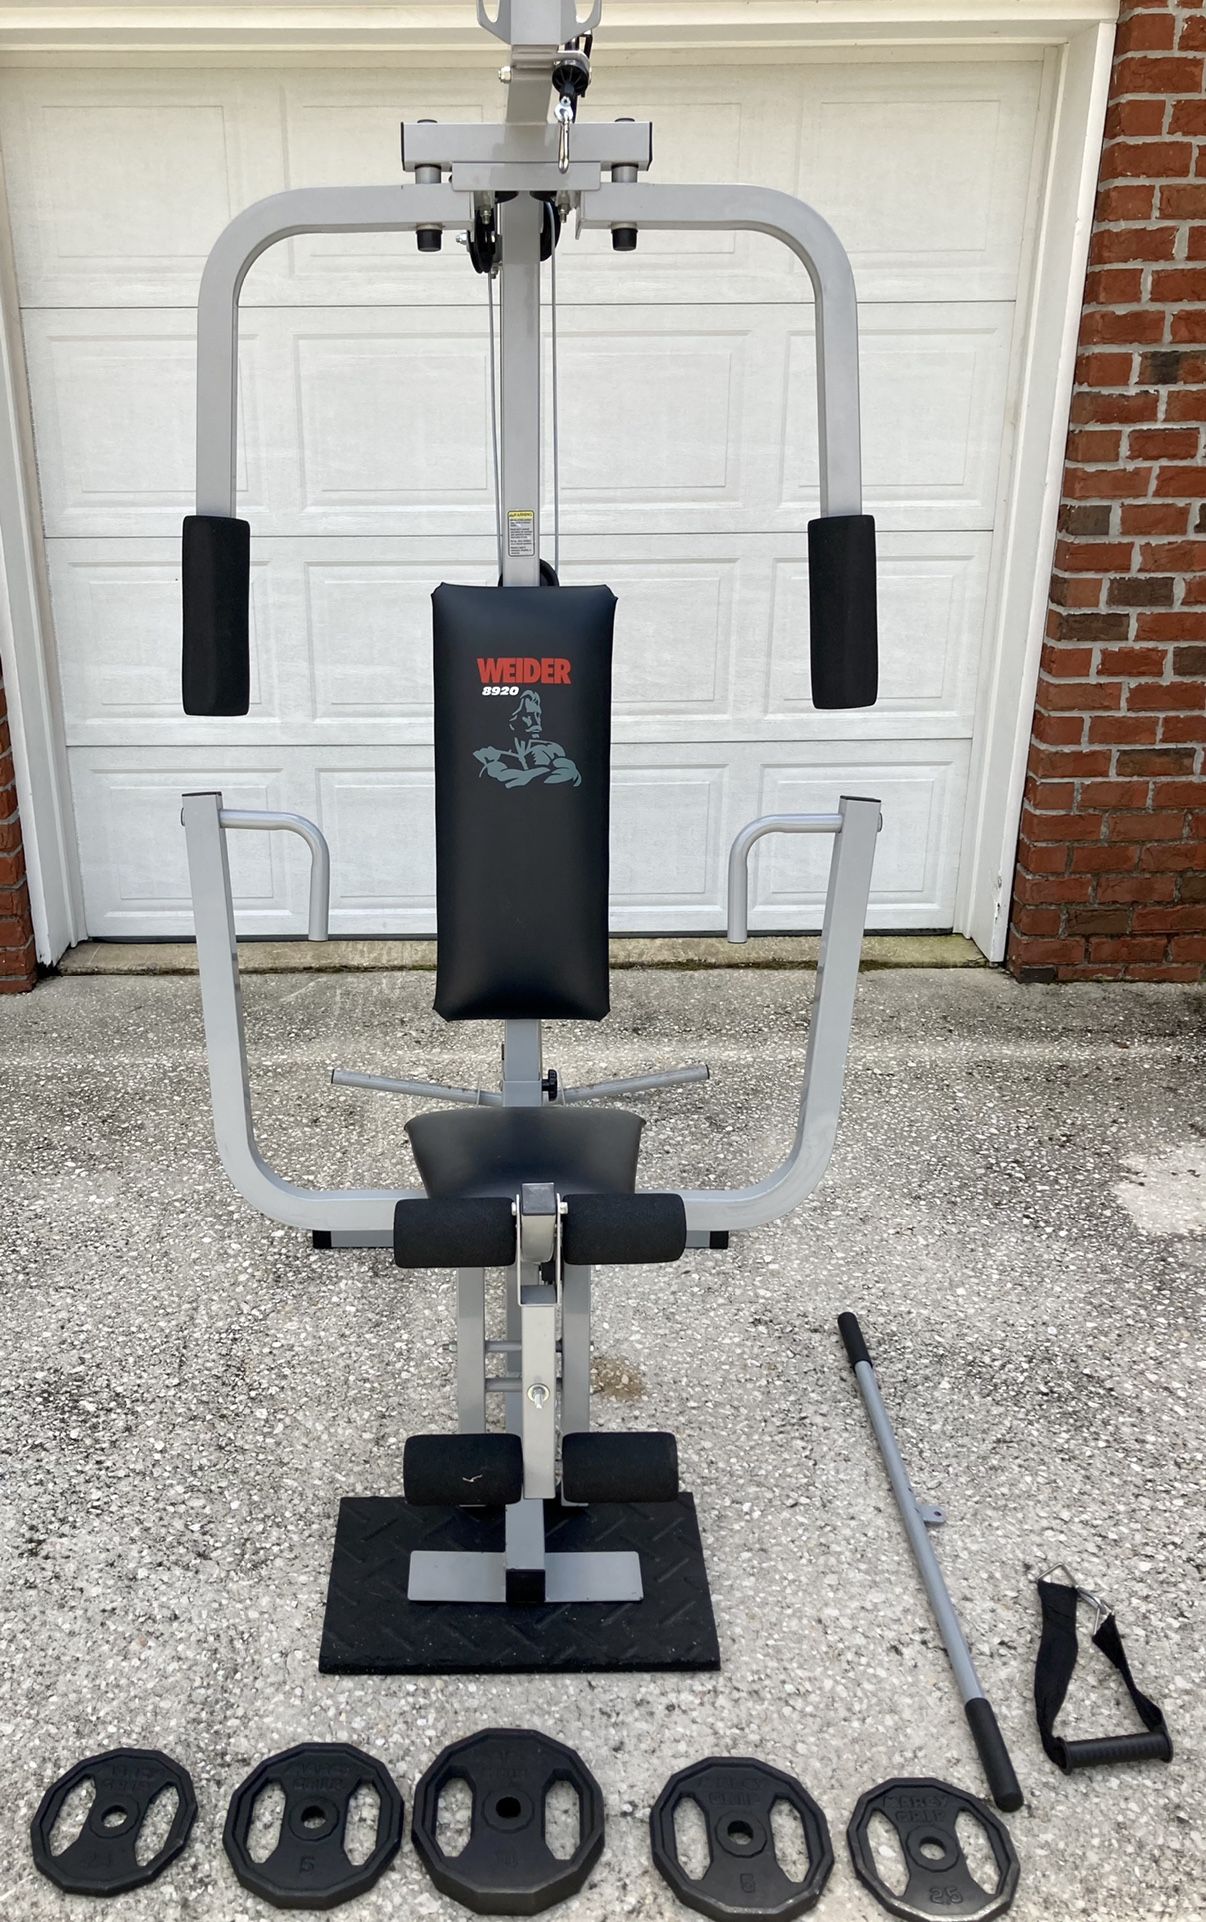 Weider 8920 Multi Home Gym Weight Bench w/ Pulldown Leg & Plates